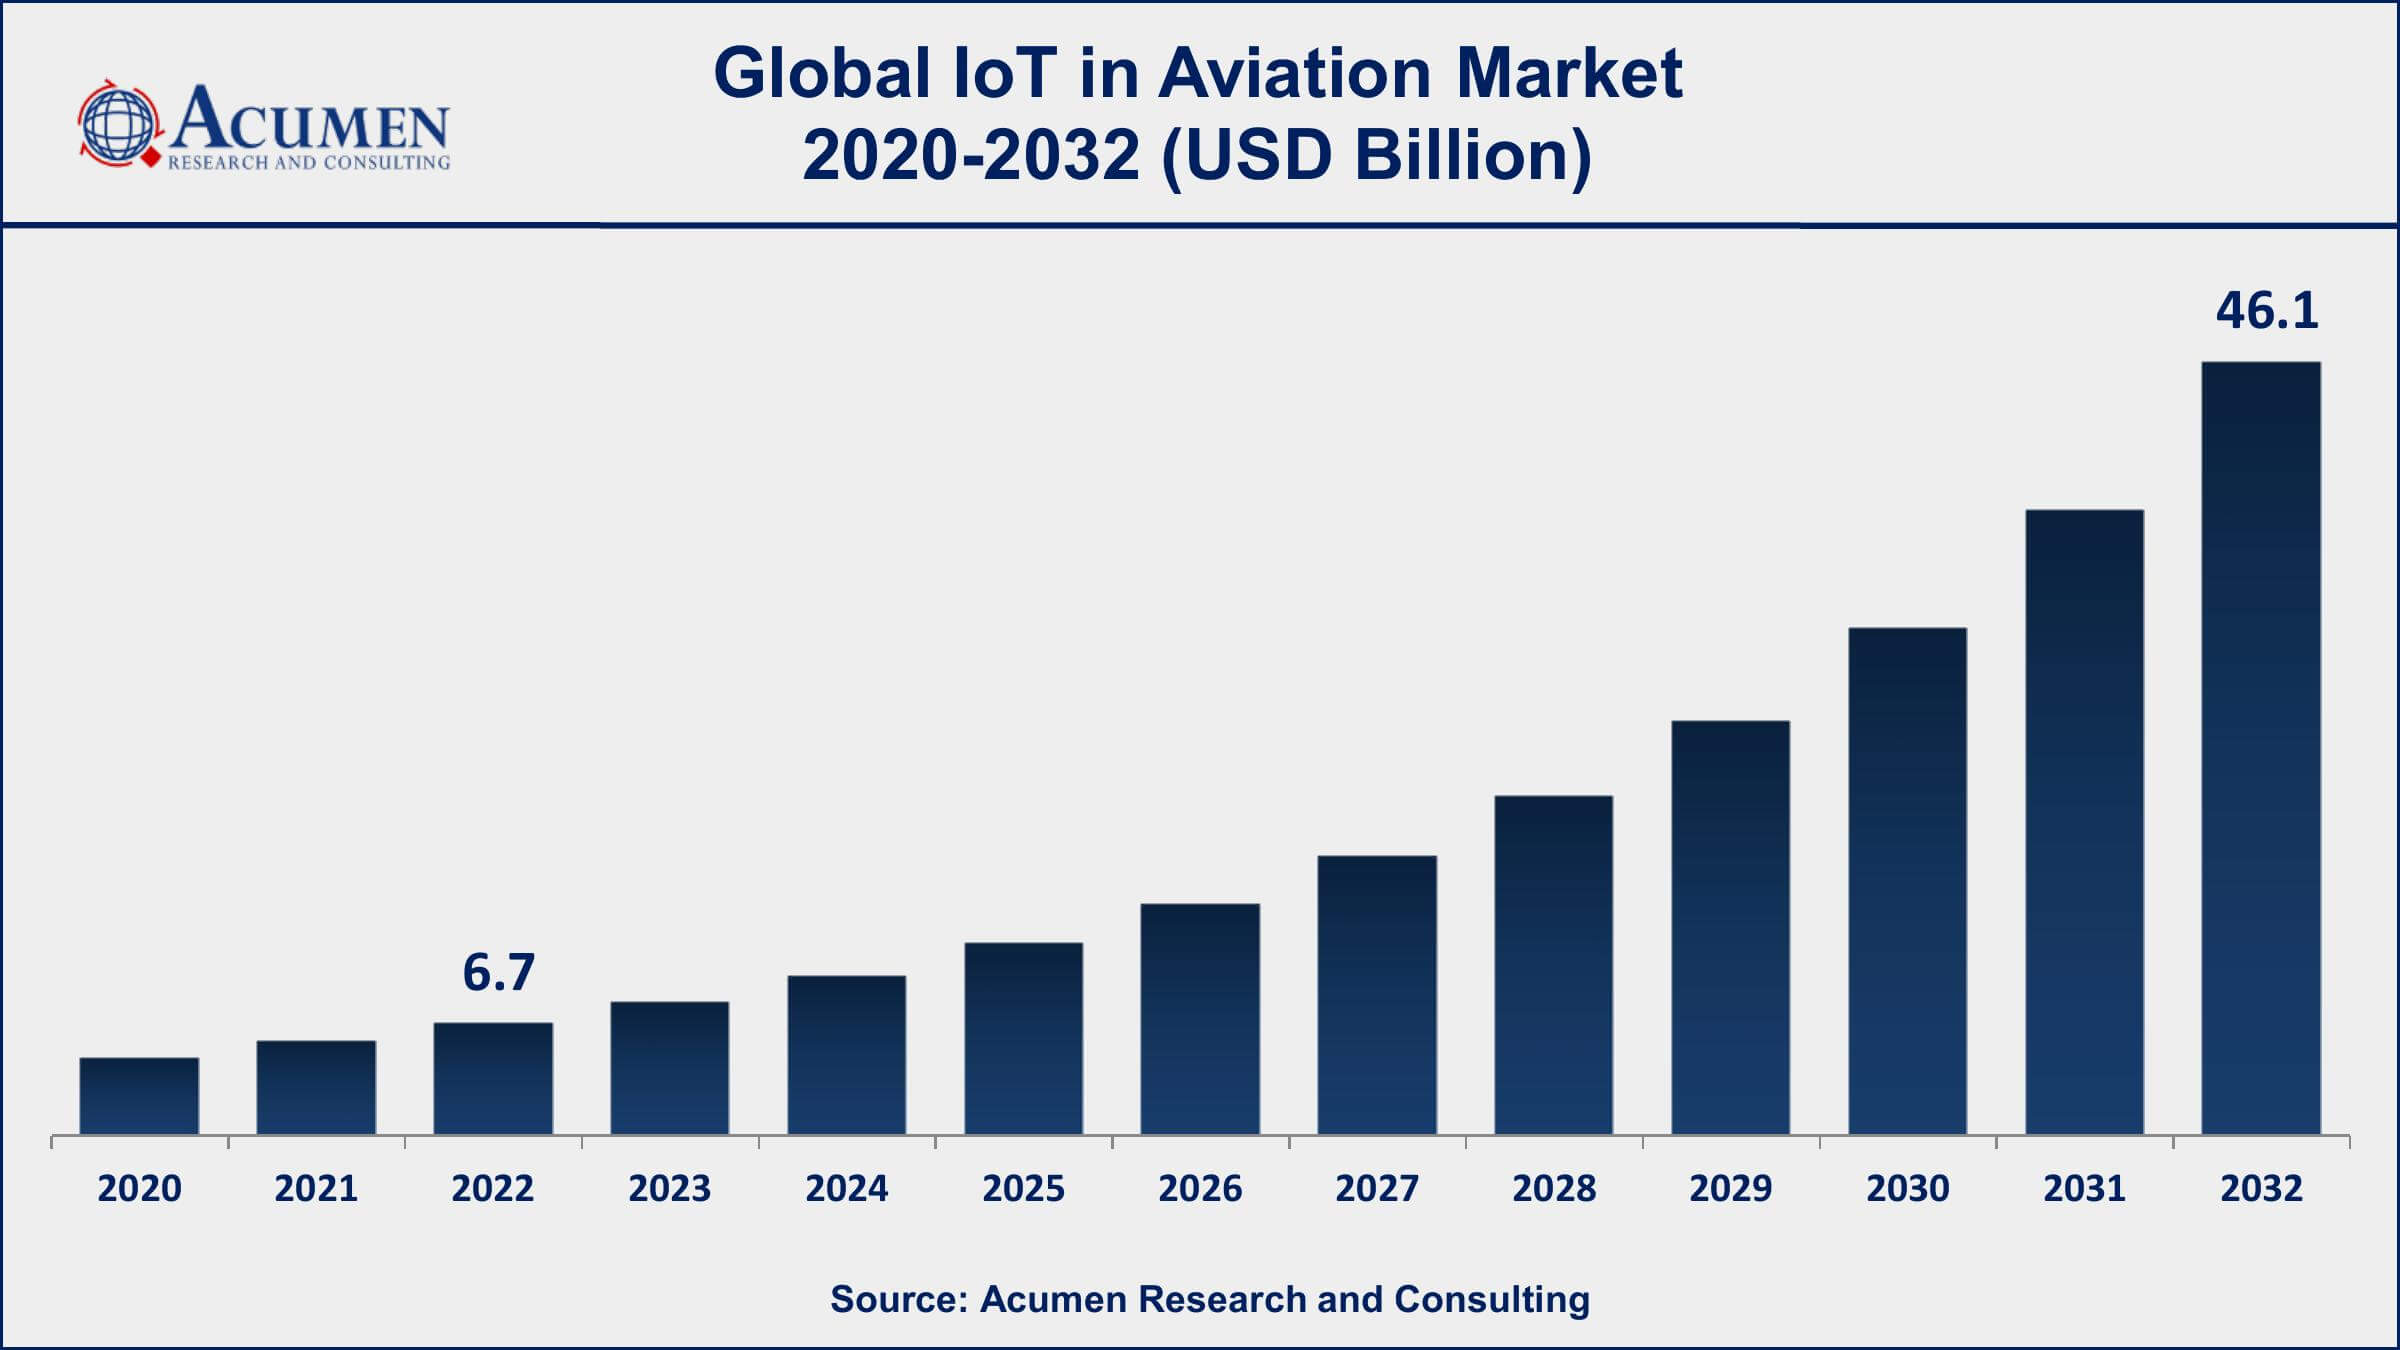 IoT in Aviation Market Dynamics